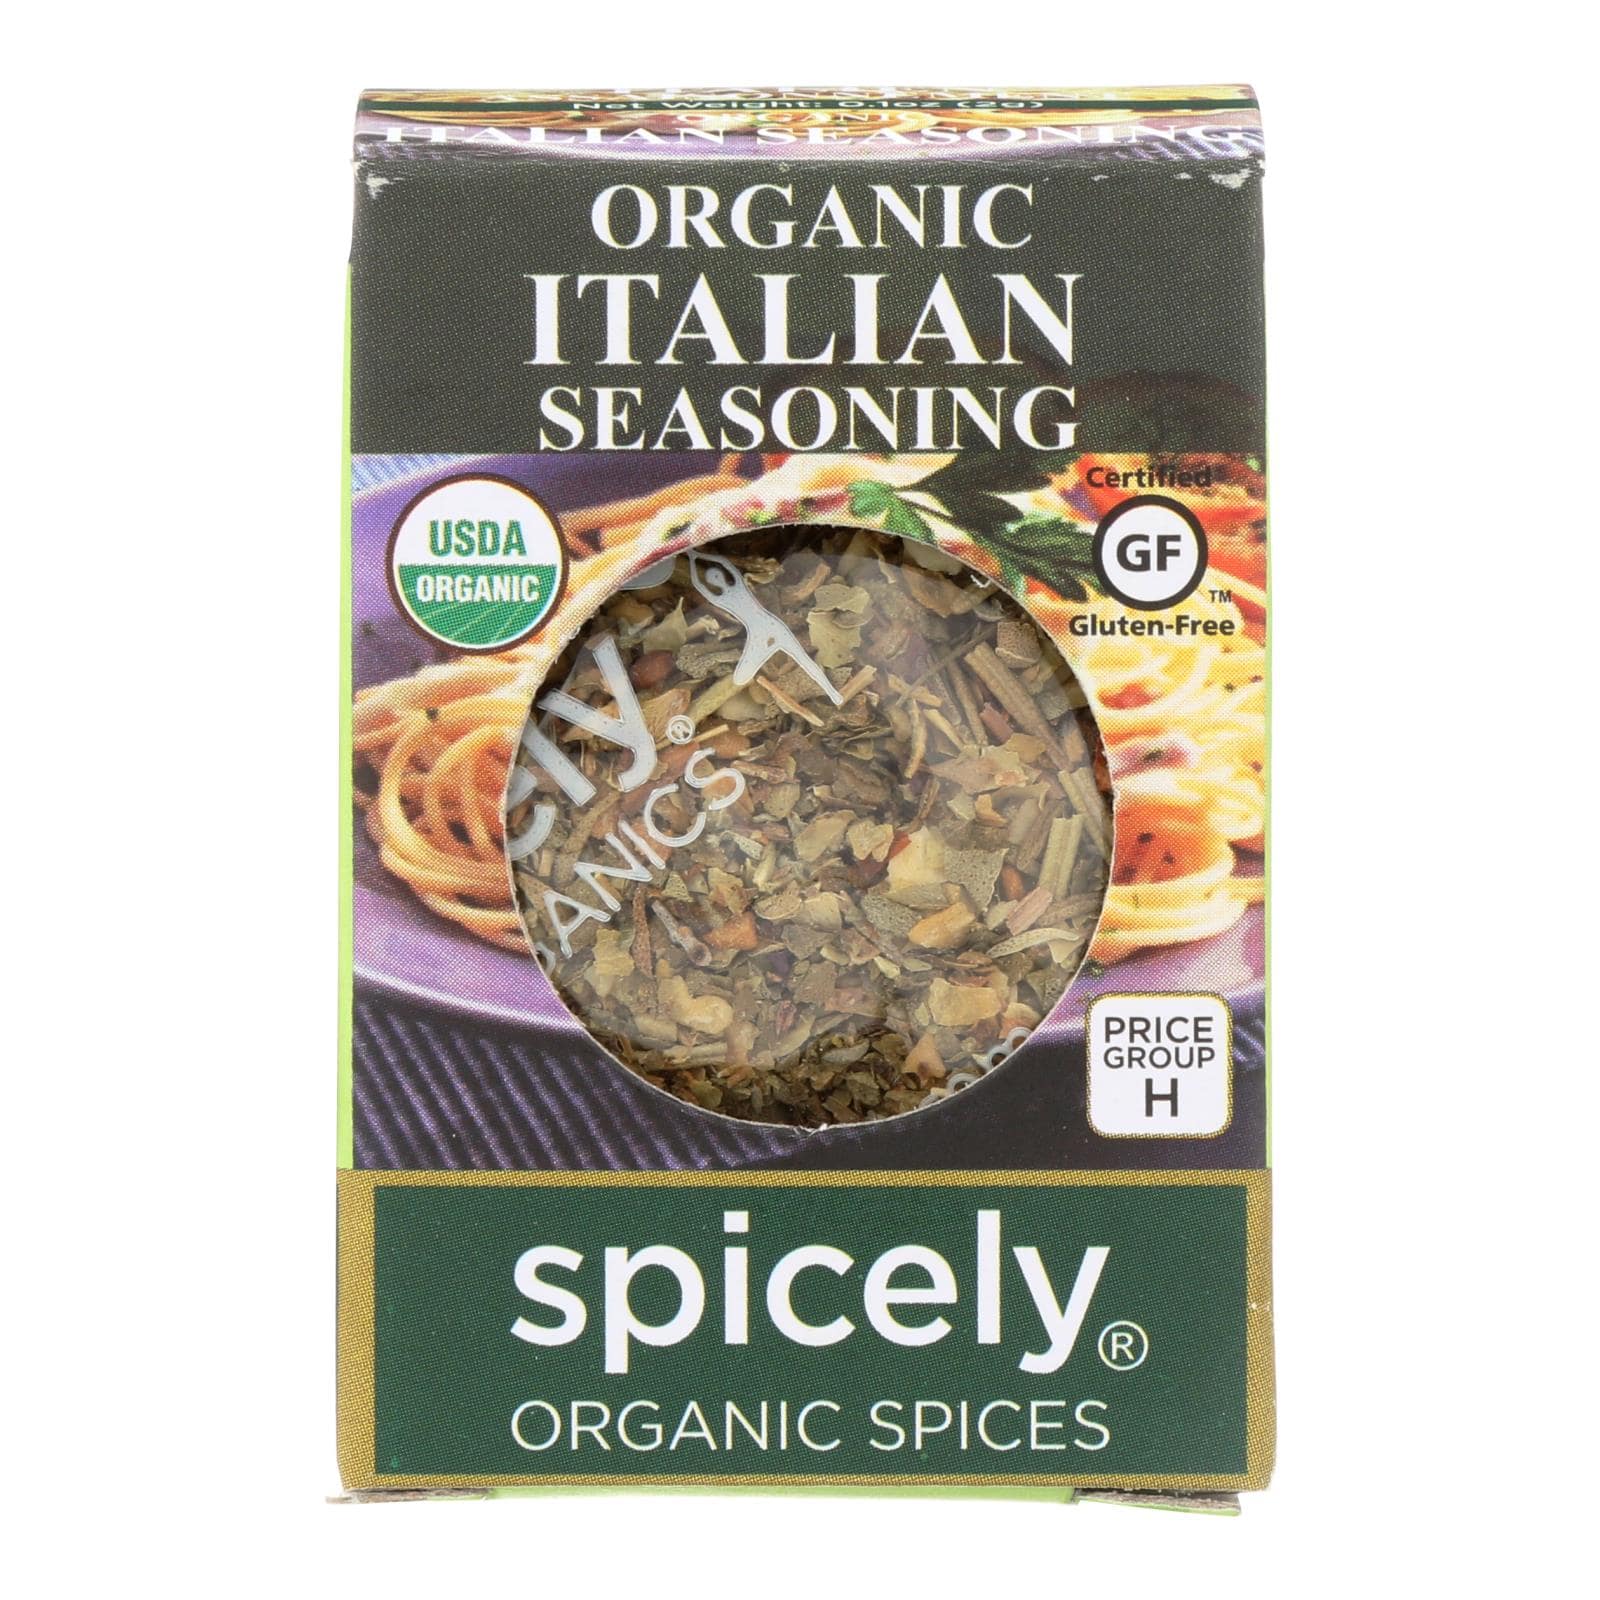 Buy Spicely Organics - Organic Italian Seasoning - Case Of 6 - 0.1 Oz.  at OnlyNaturals.us